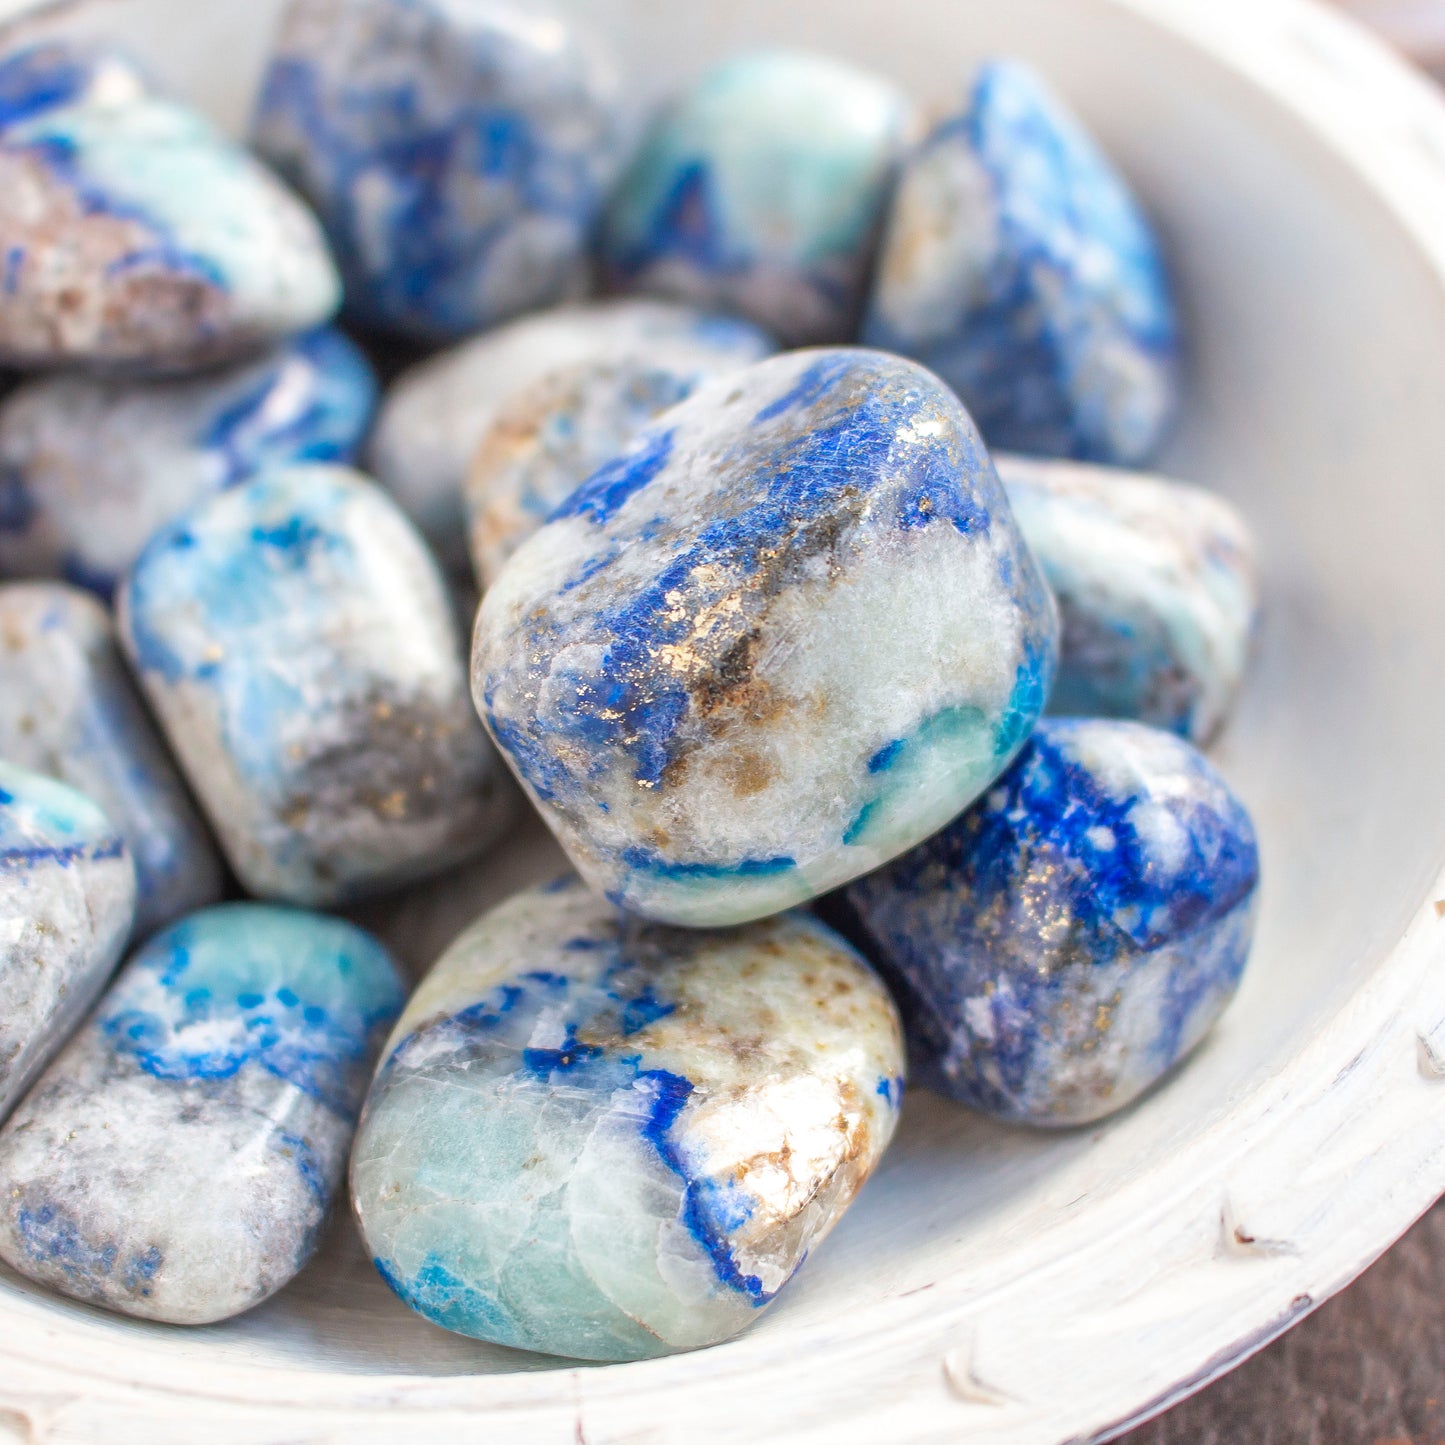 Hackmanite, Pyrite, Quartz, Granite, Lapis Lazuli Tumblestone | Mixed Mineral Crystal | UV Reactive Stone